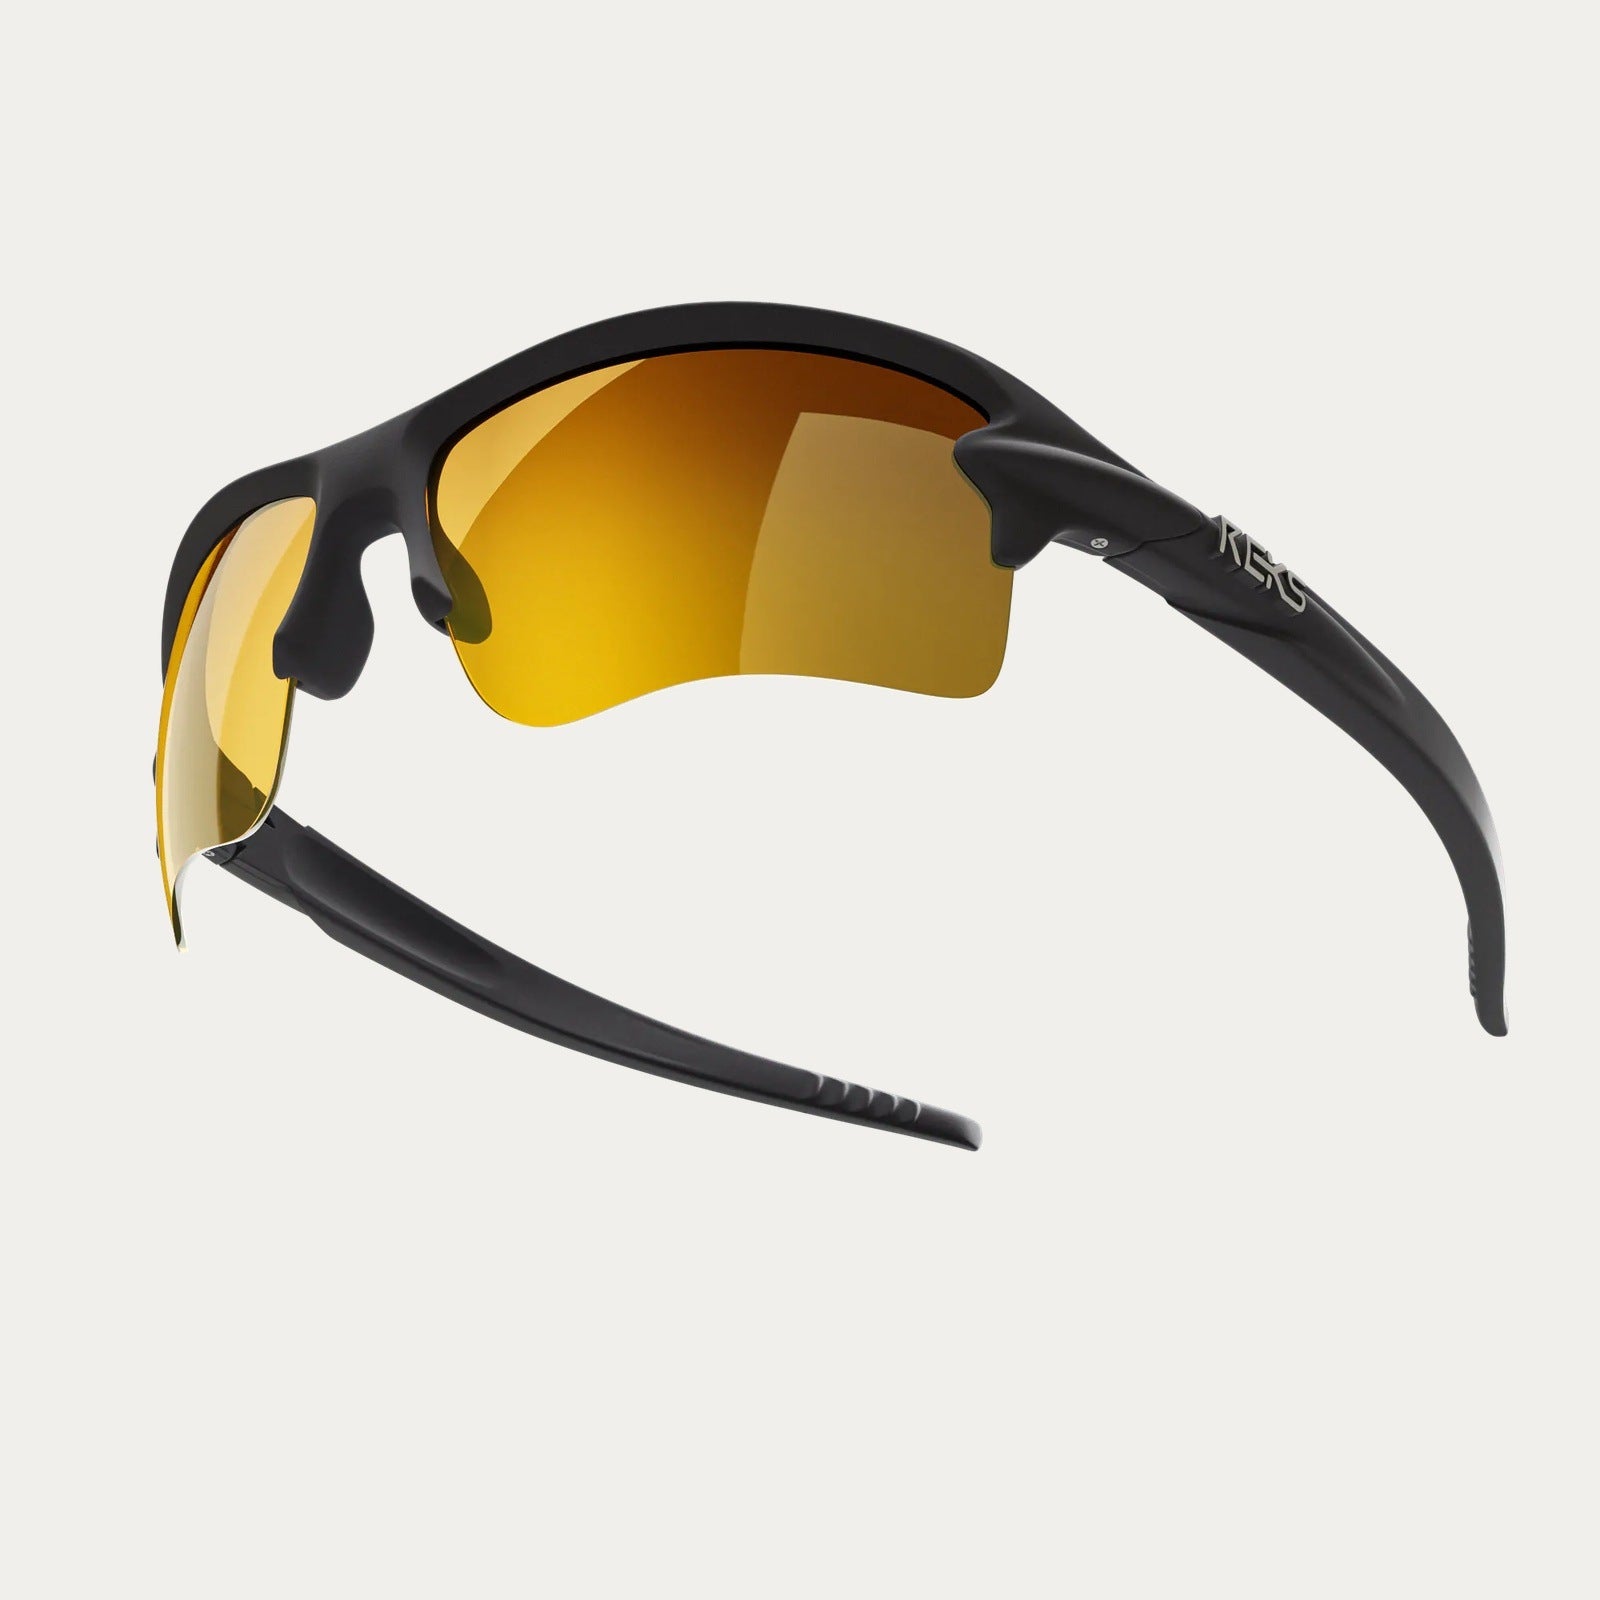 Reks | Sling Blade Trivex Polarized Prescription Sunglasses Solid Smoke Gold Mirror